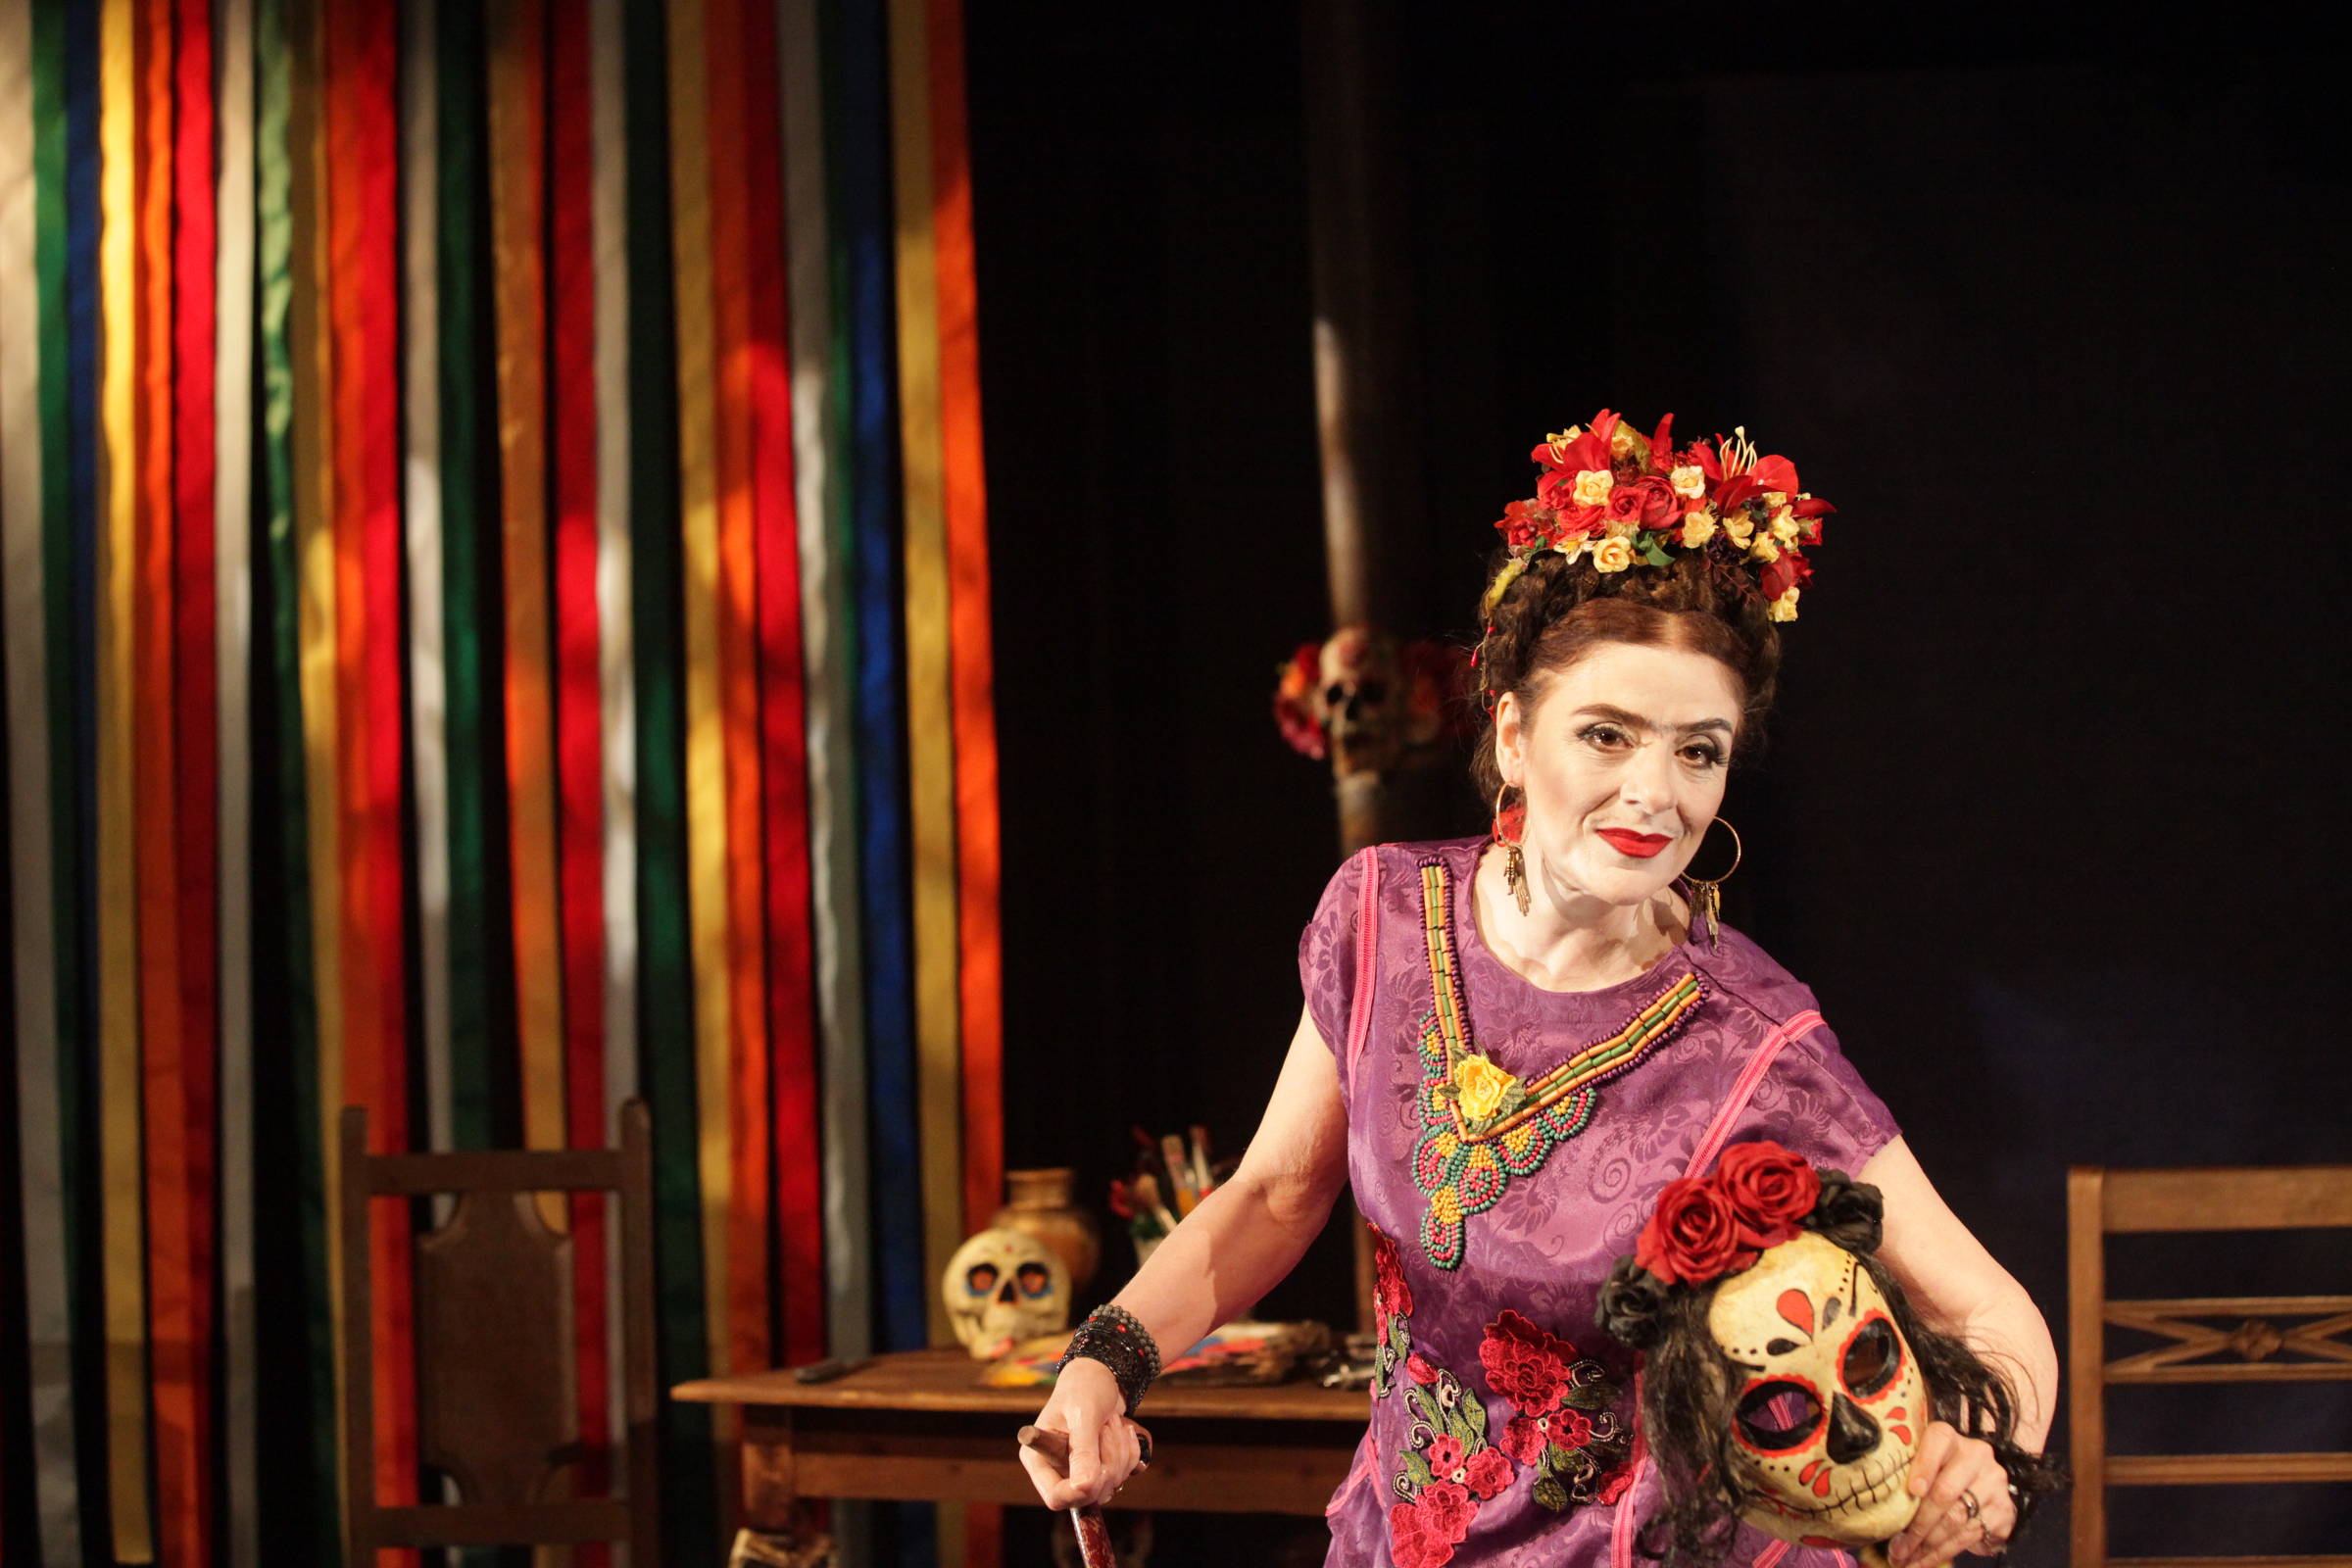 Teatro do Ornitorrinco apresenta Frida Kahlo - Viva la Vida no Itaú Cultural